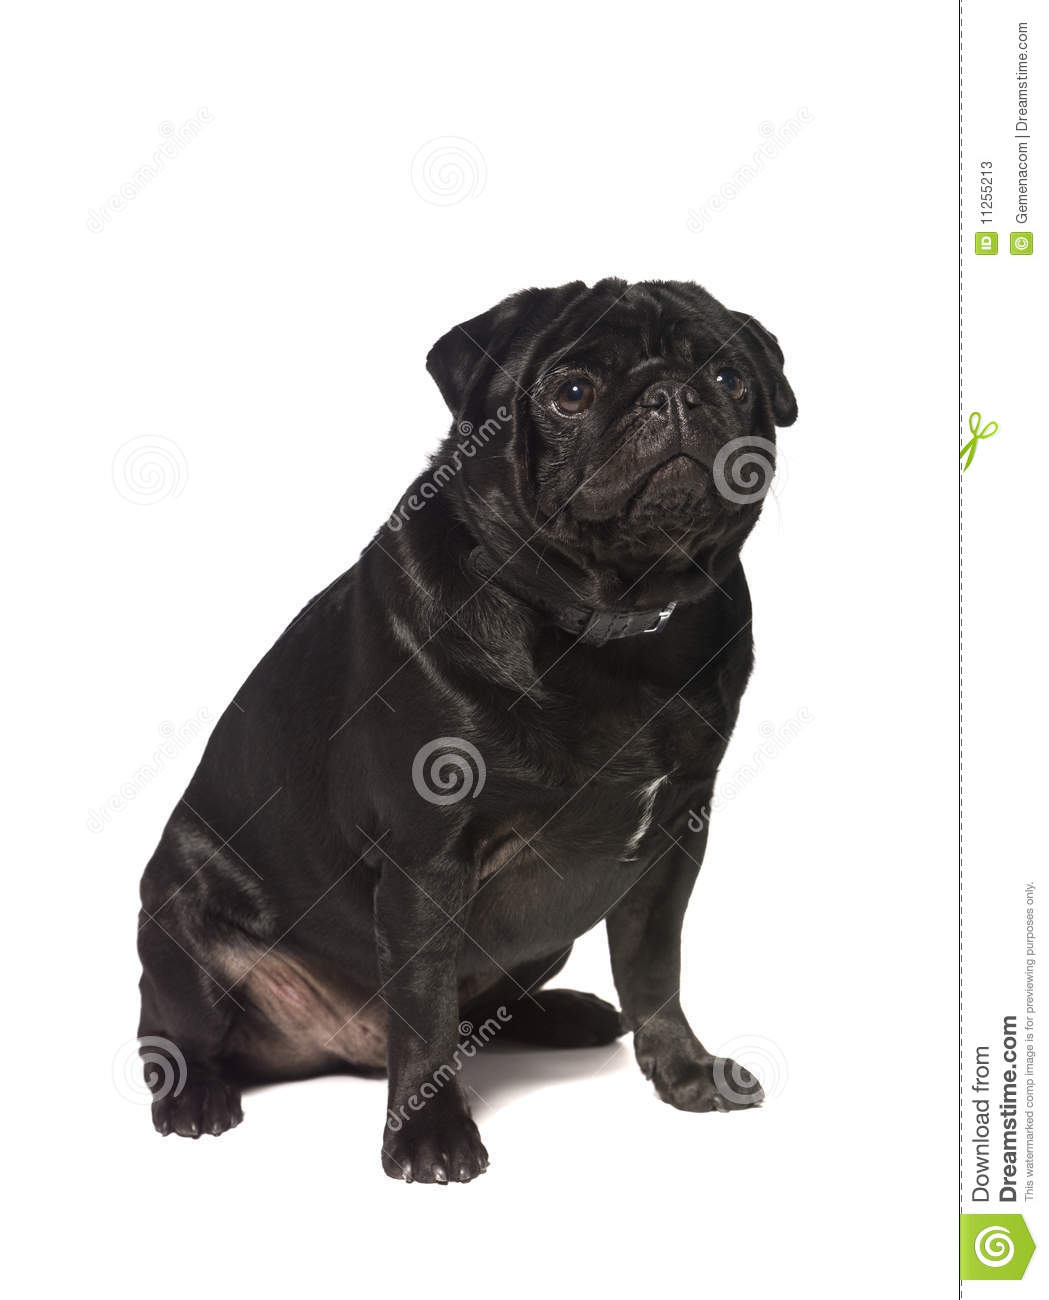 Black Pug Isolated On A White Background